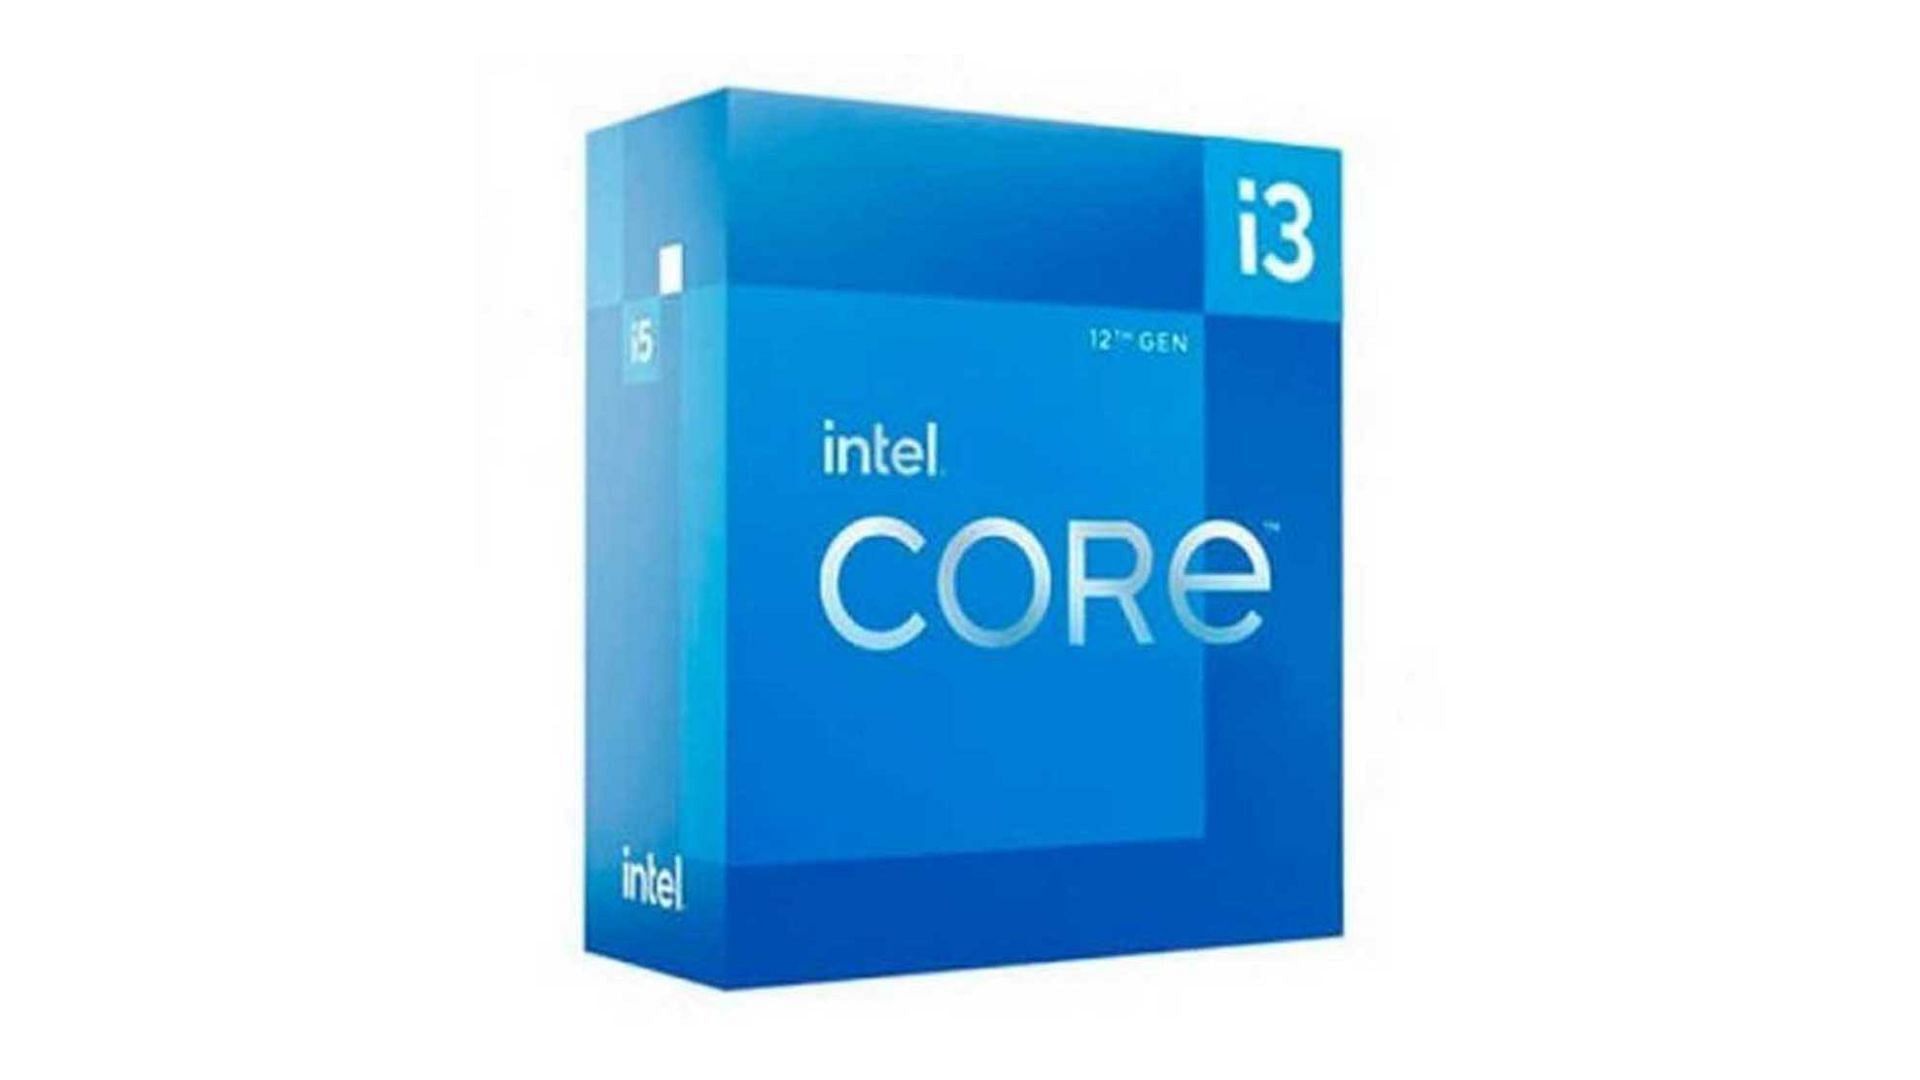 The Intel Core i3 12100 processor (Image via Intel)